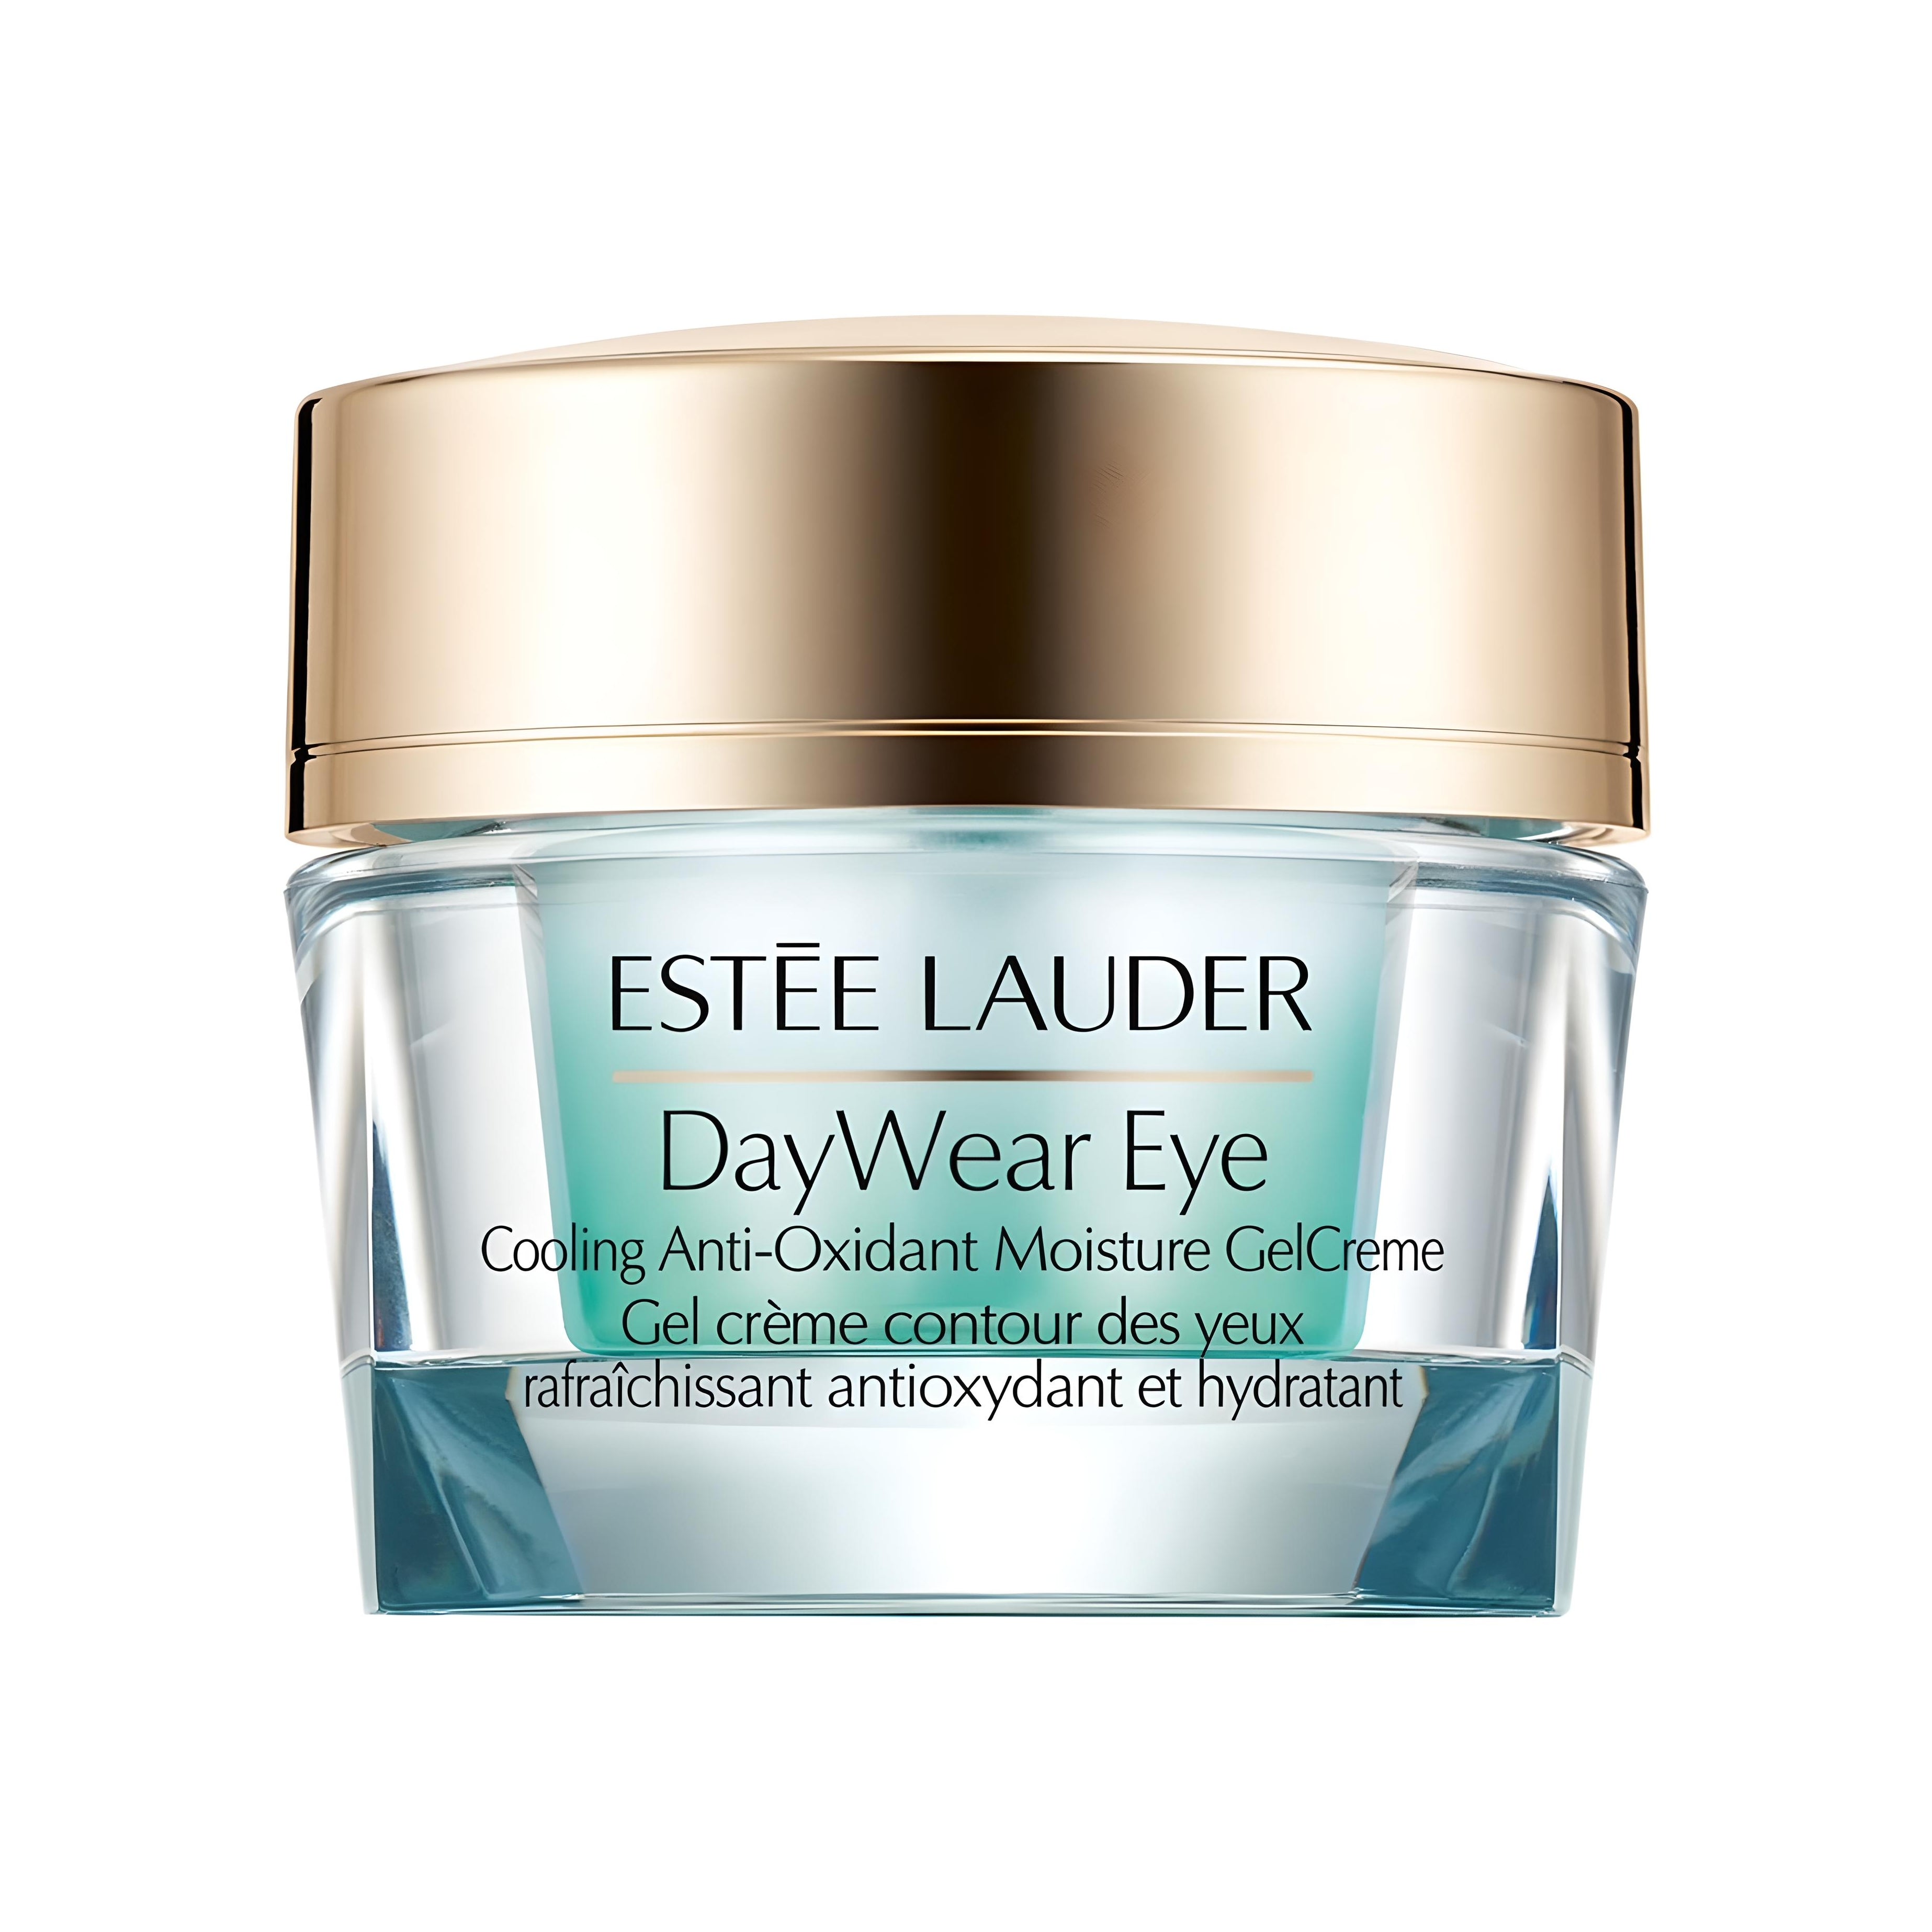 DayWear Eye Cooling Anti-Oxidant Moisture GelCreme Gesichtspflege ESTÉE LAUDER   